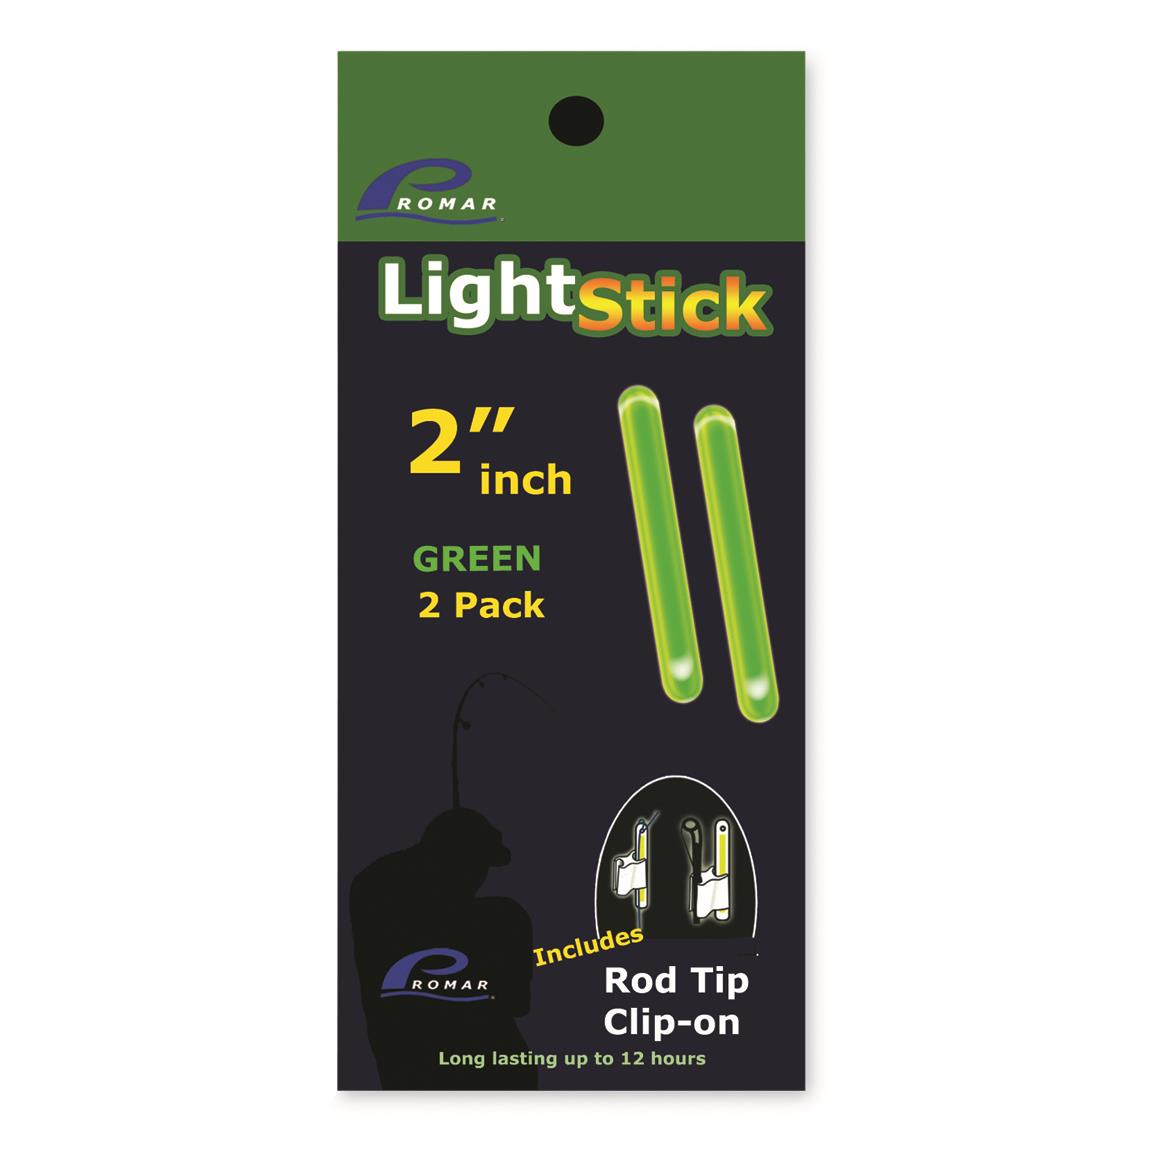 Promar 2" Glow Sticks, 2 Pack